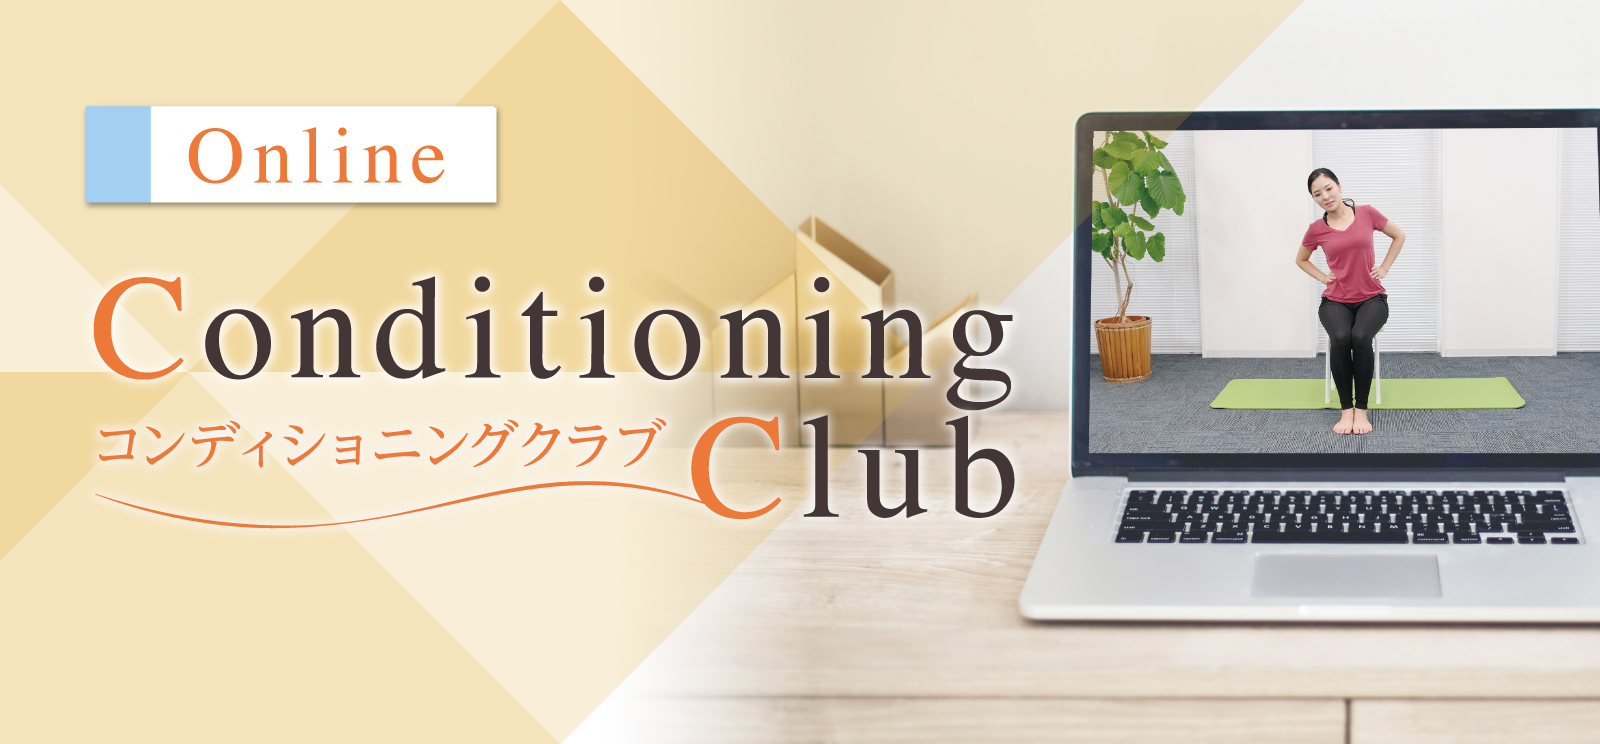 Online Conditioning Club コンディショニングクラブ